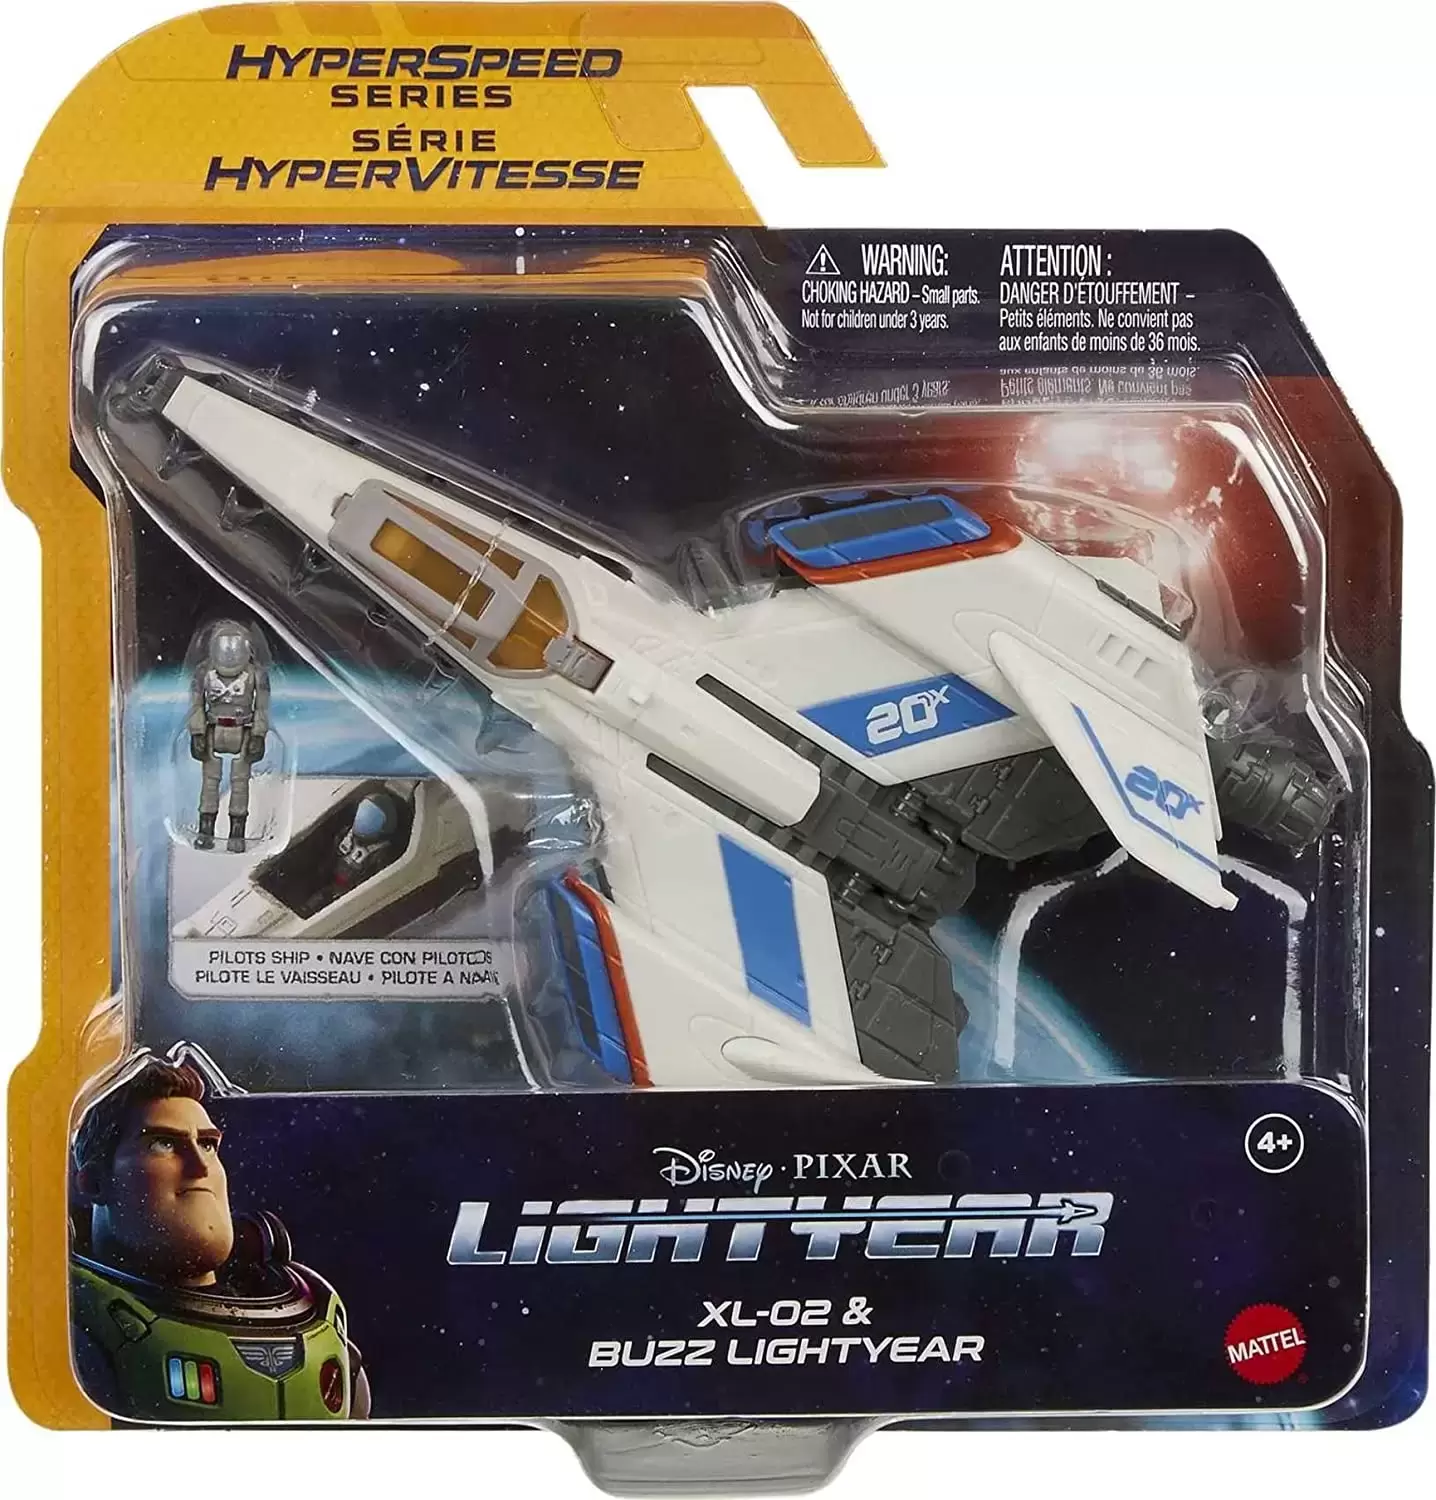 Lightyear - Mattel - Hyperspeed Series - XL-02 & Buzz Lightyear